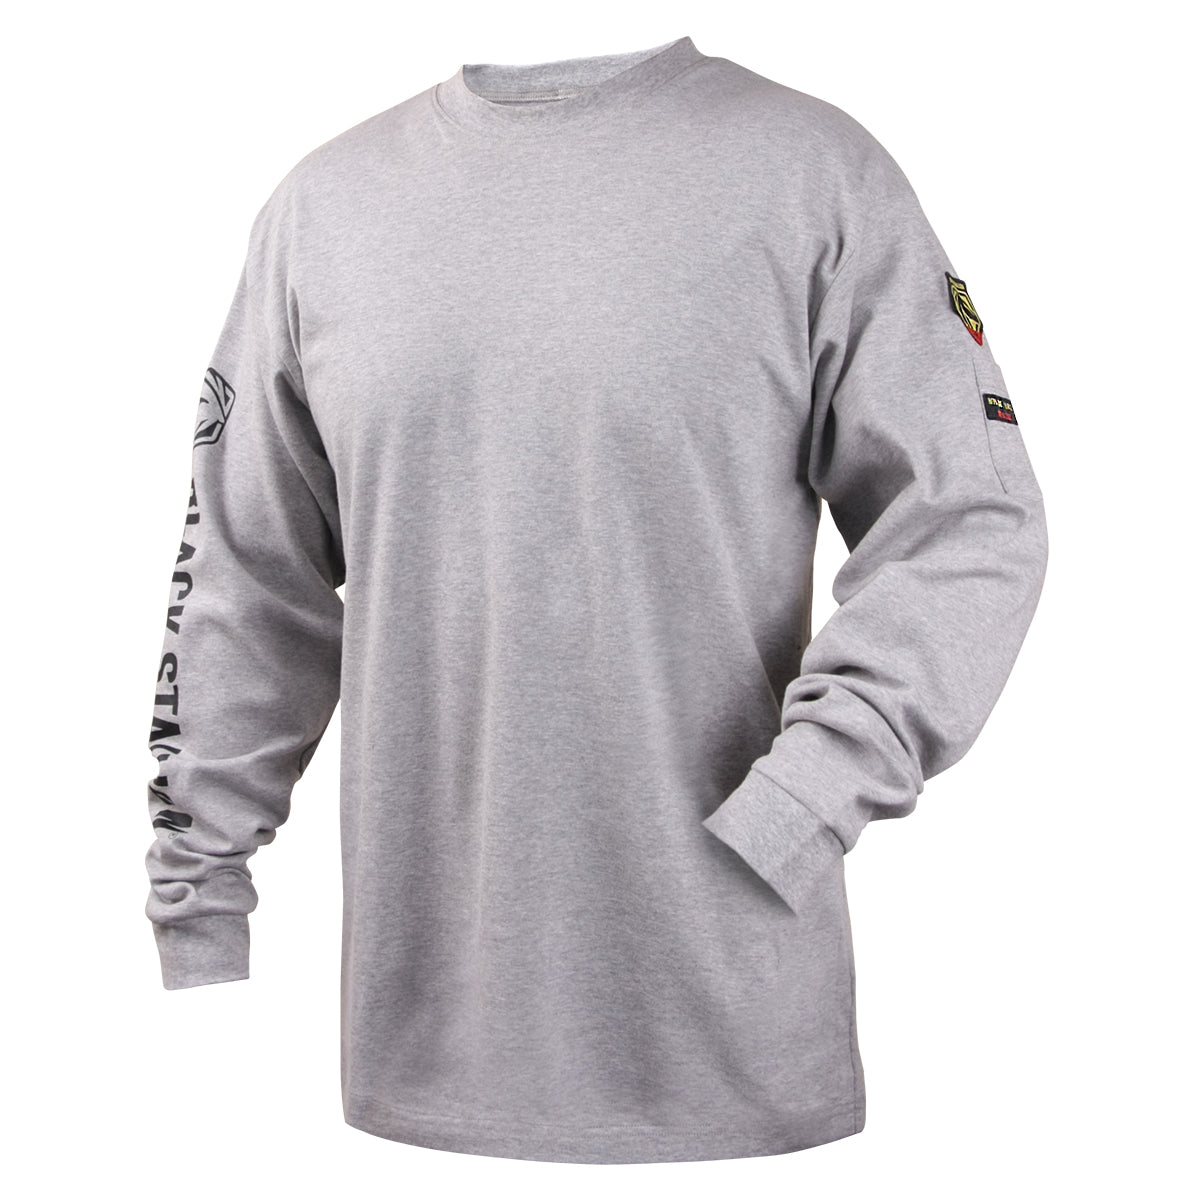 BLACK STALLION - 7 oz. FR Cotton Knit Long-Sleeve T-Shirt, Gray